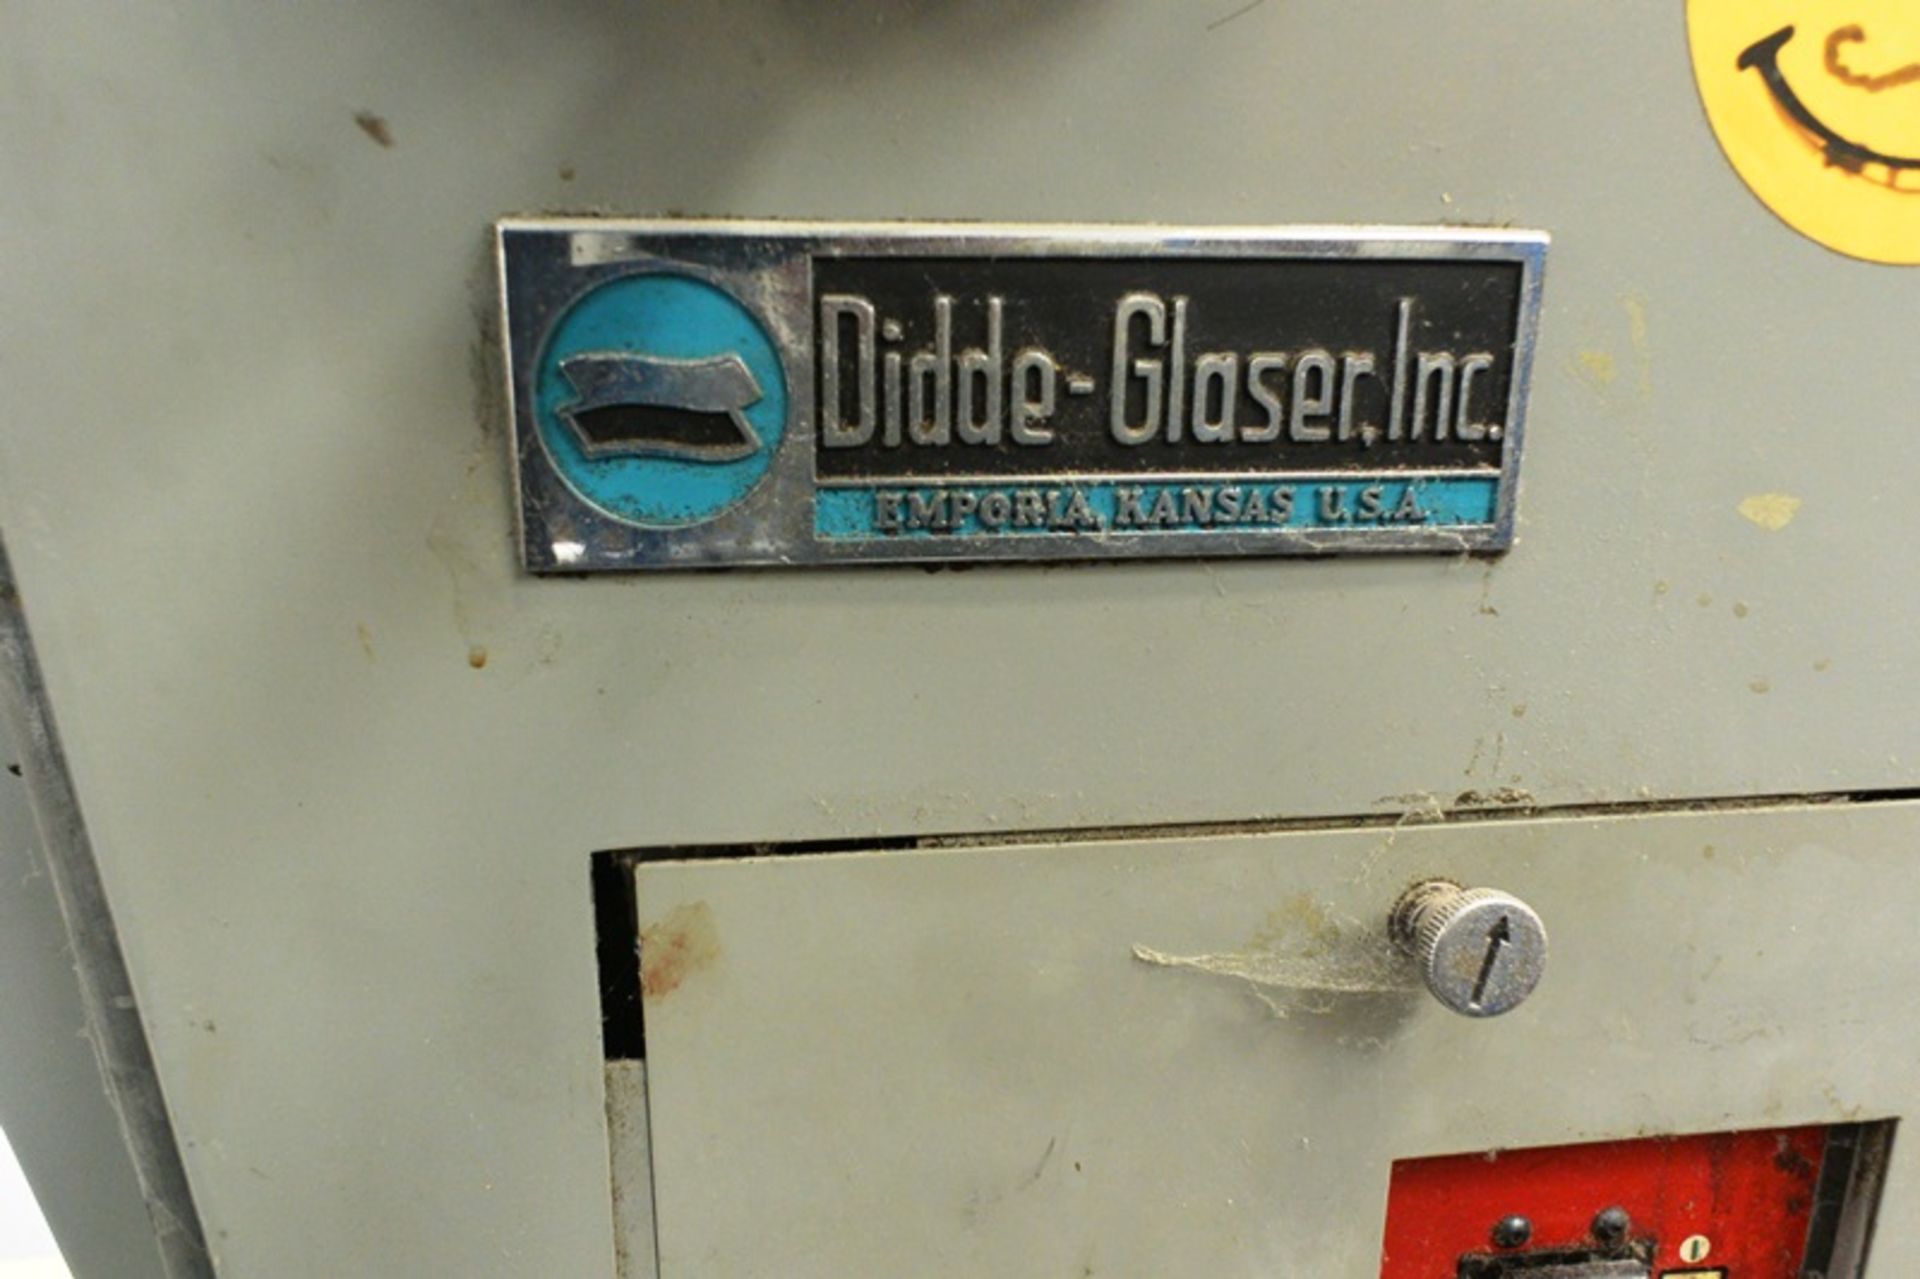 Didde-Glasser Speed-Klect 7 station collator machine, model no. 715AGN5L, serial no. EIG274, - Image 10 of 11